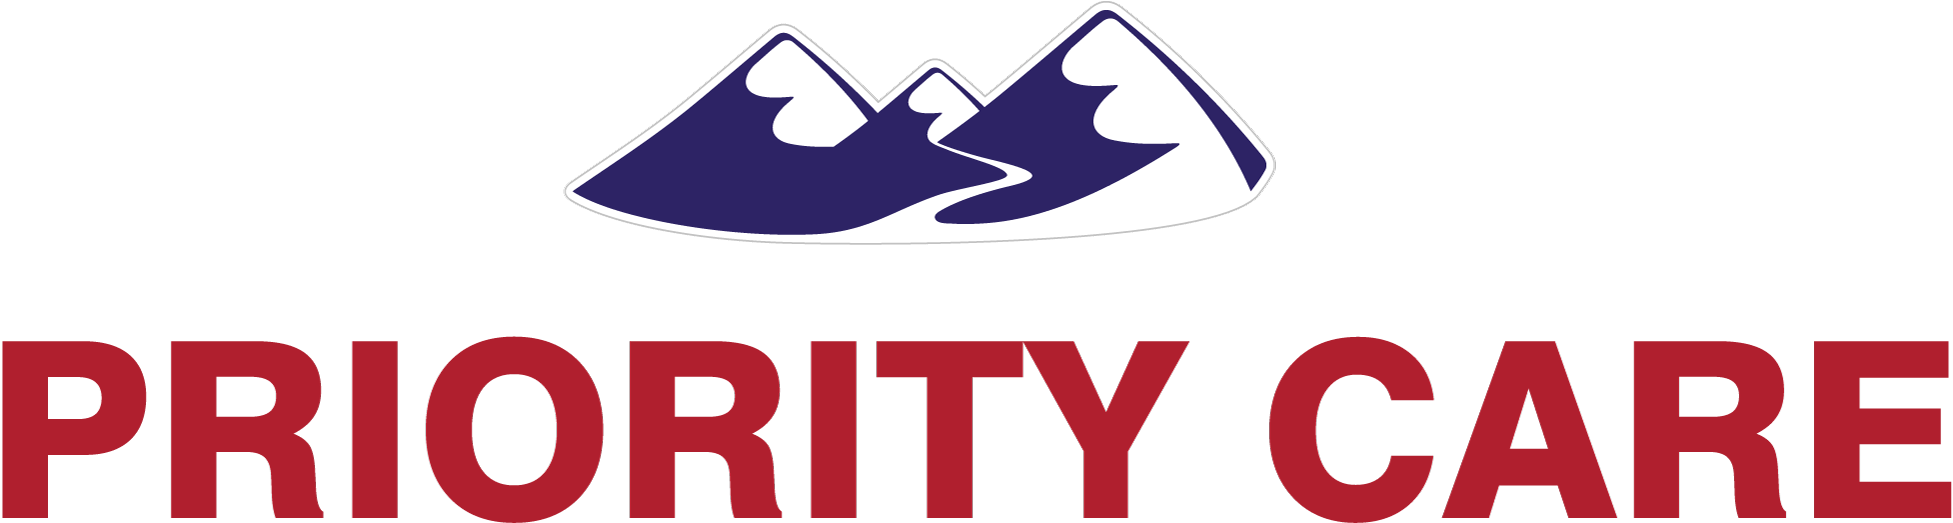 Priority-care - Priority-care (2000x558)